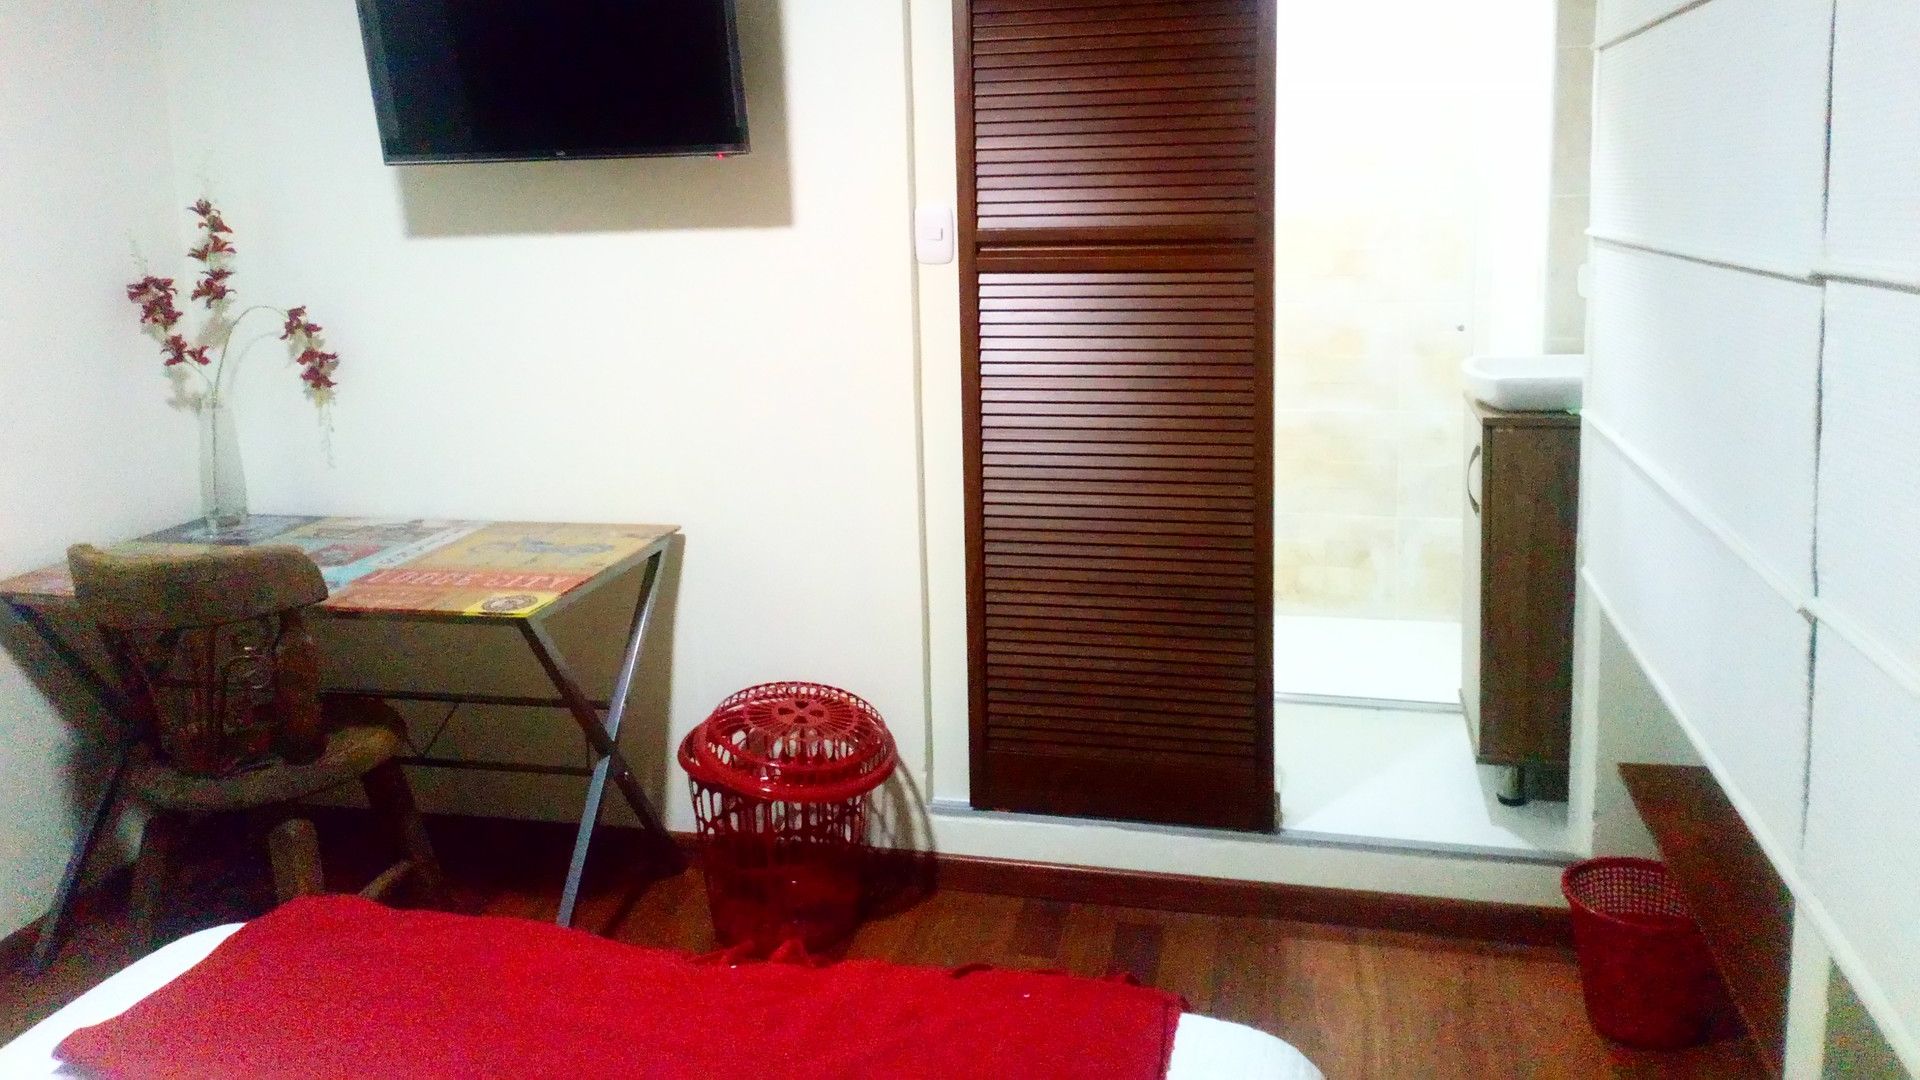 Room in 8 bedroom apt at Cra. 68a #102-3, Bogotá, Colombia | #3320255 ...